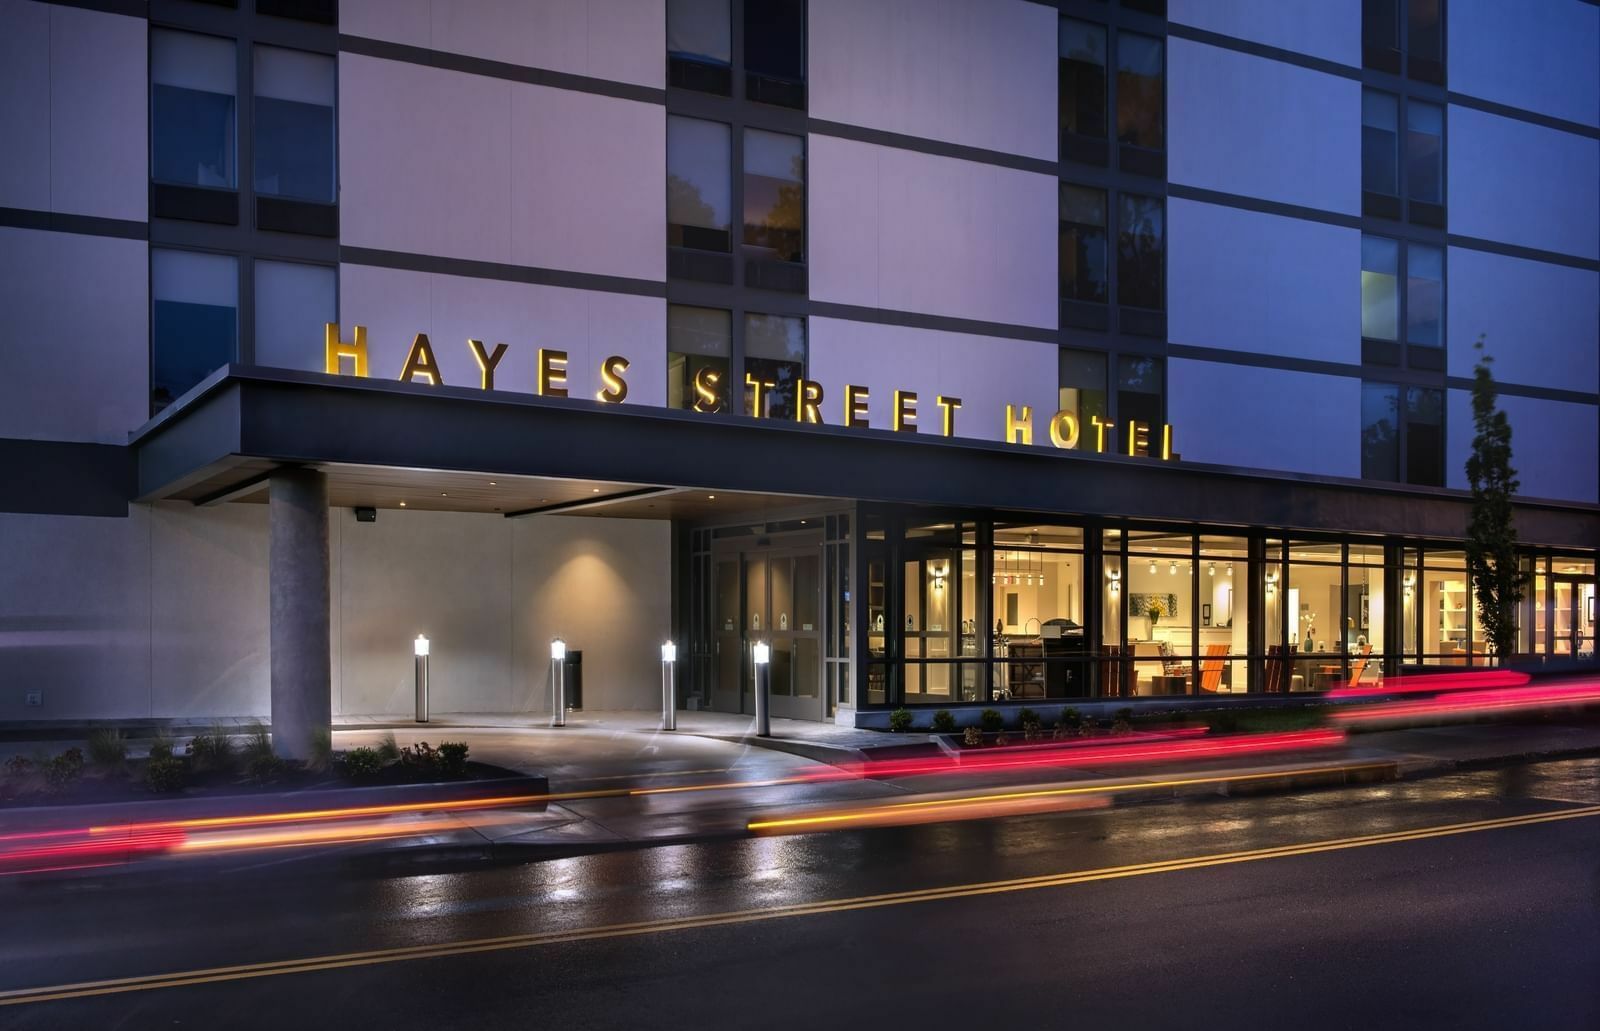 Photo of Hayes Street Hotel, Nashville, TN